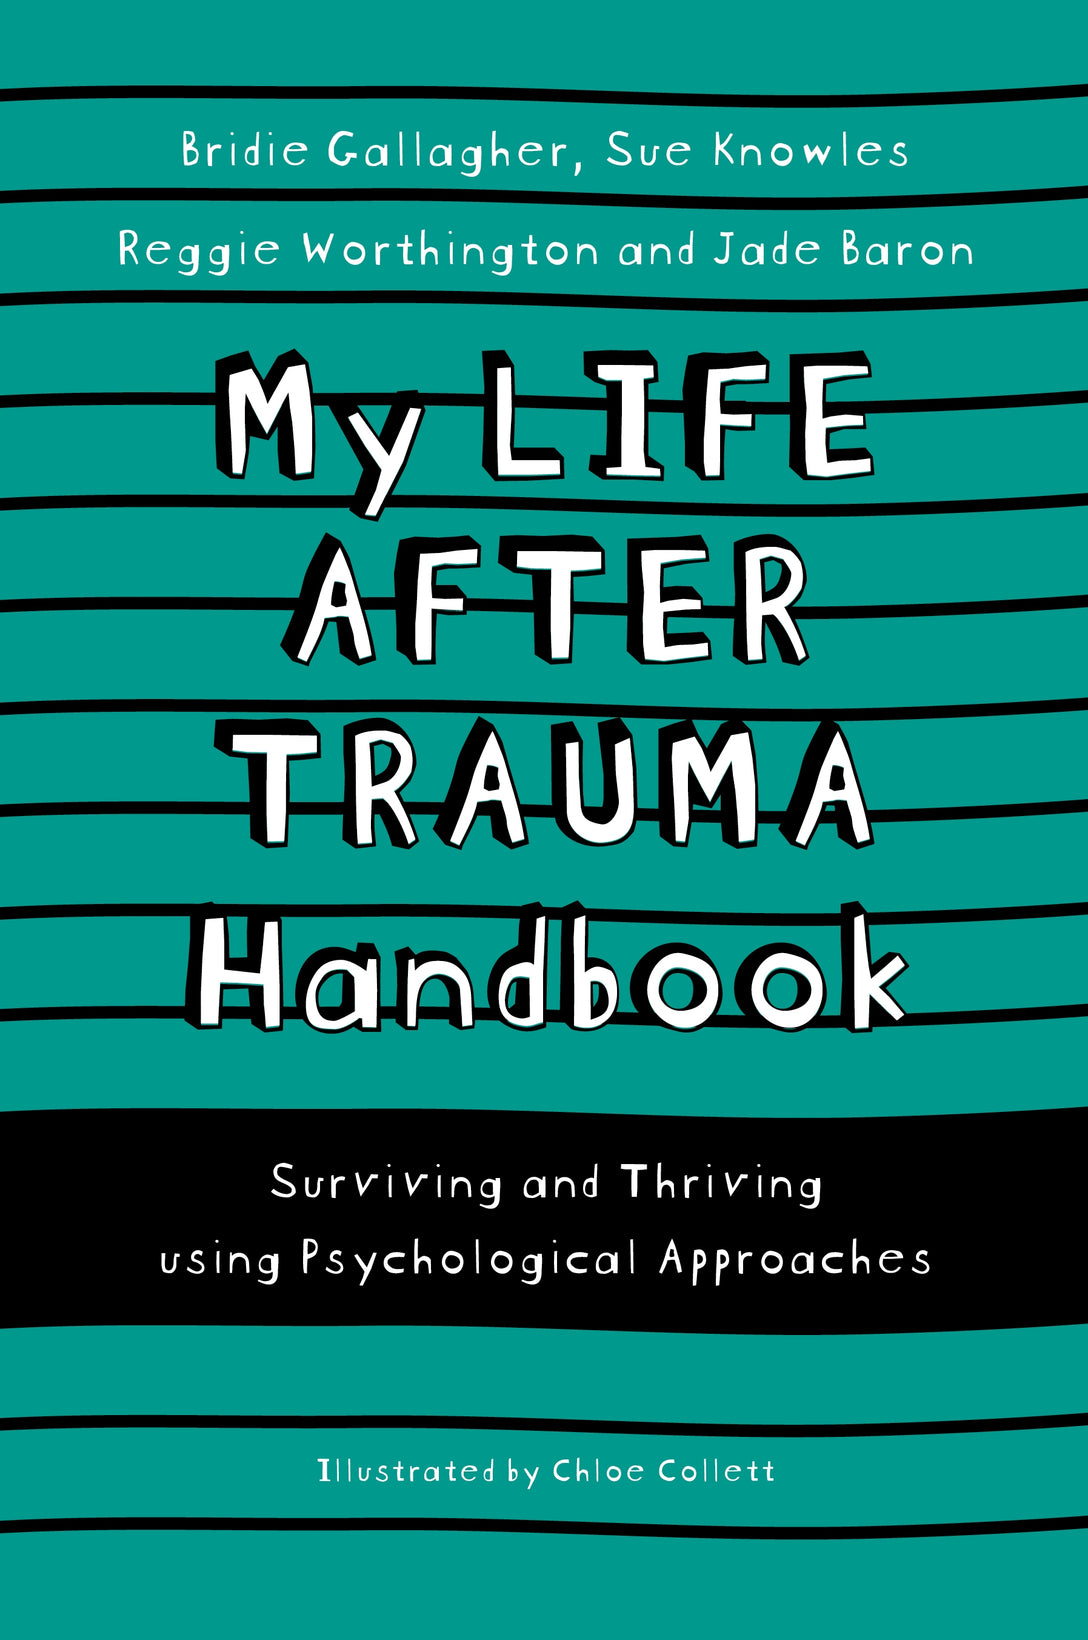 My Life After Trauma Handbook by Chloe Collett, Sue Knowles, Bridie Gallagher, Jade Baron, Reggie Worthington